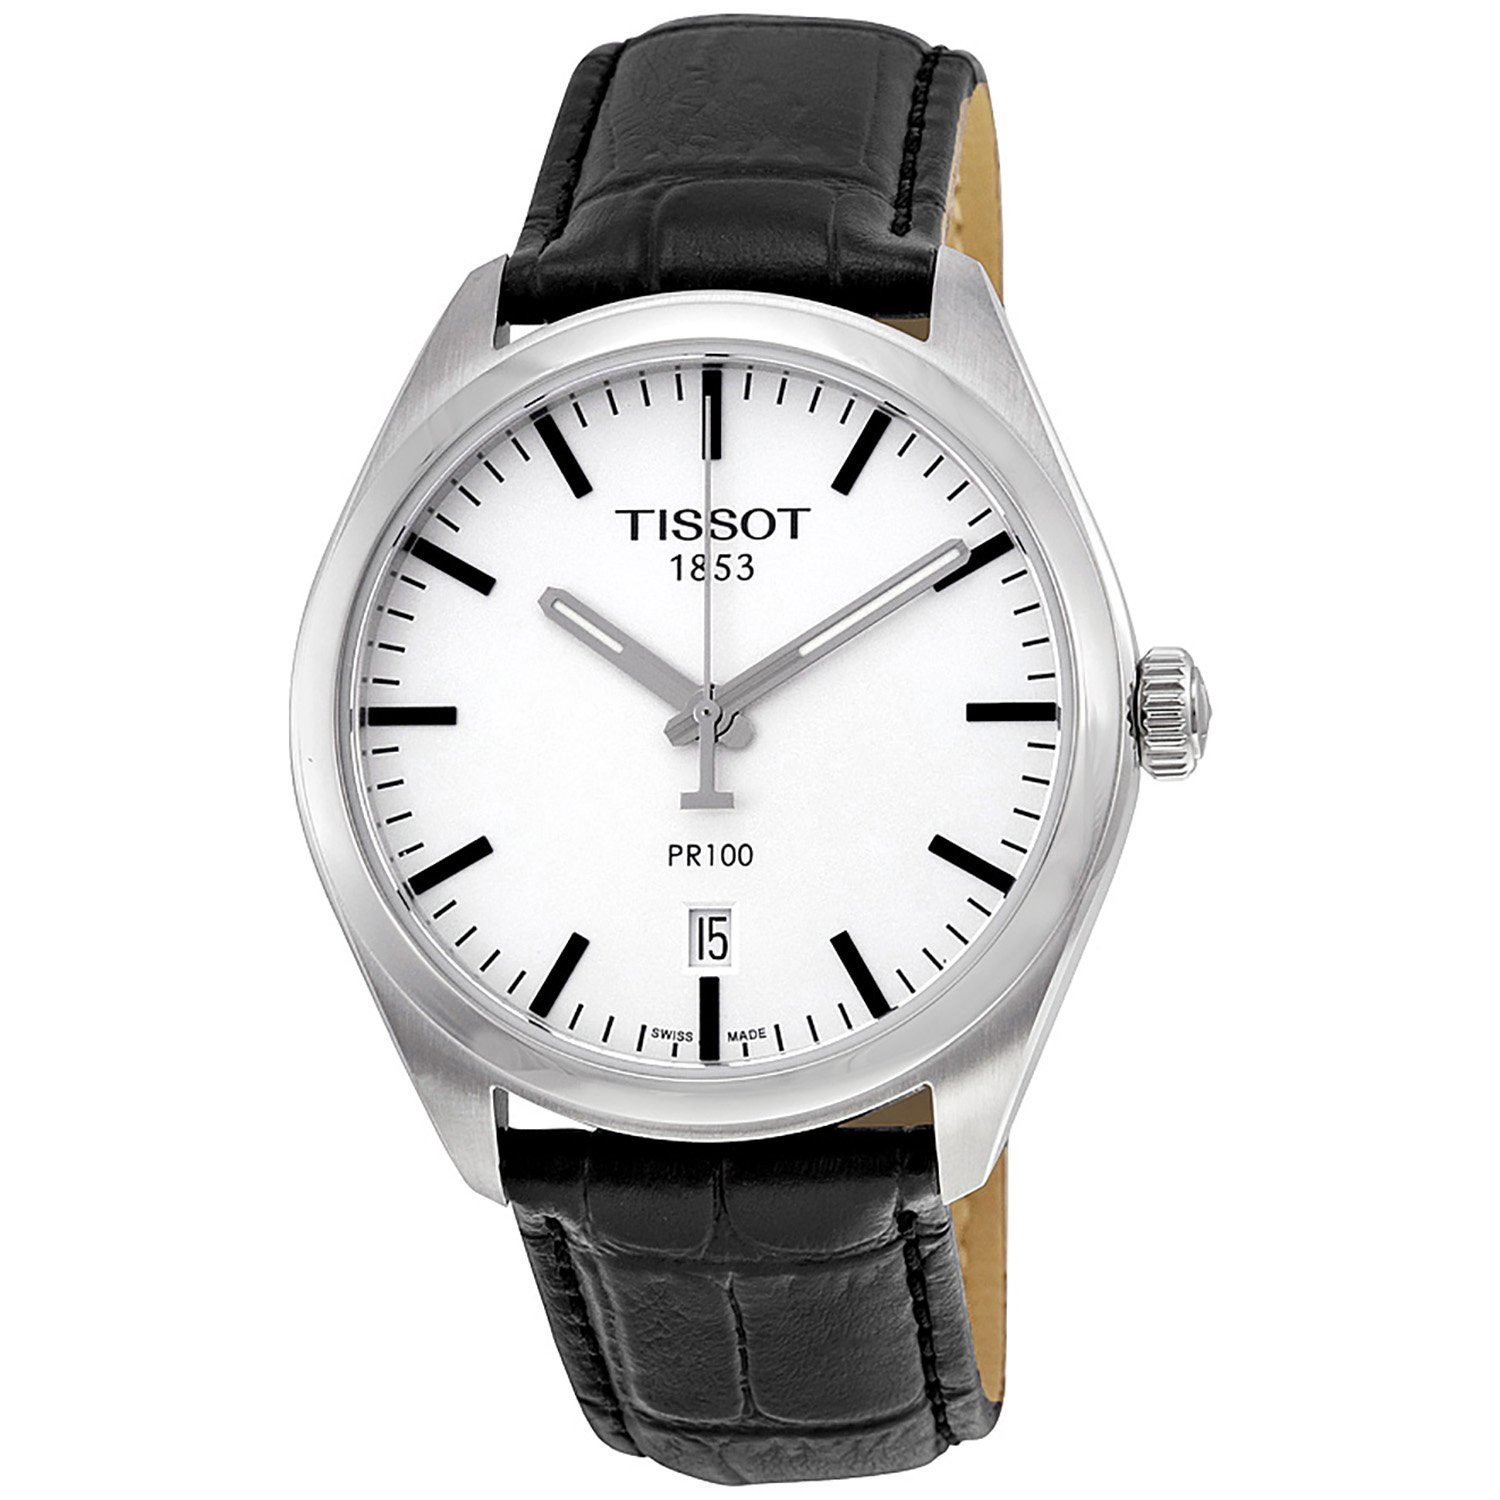 Montre Tissot PR100 cuir noir cadran blanc